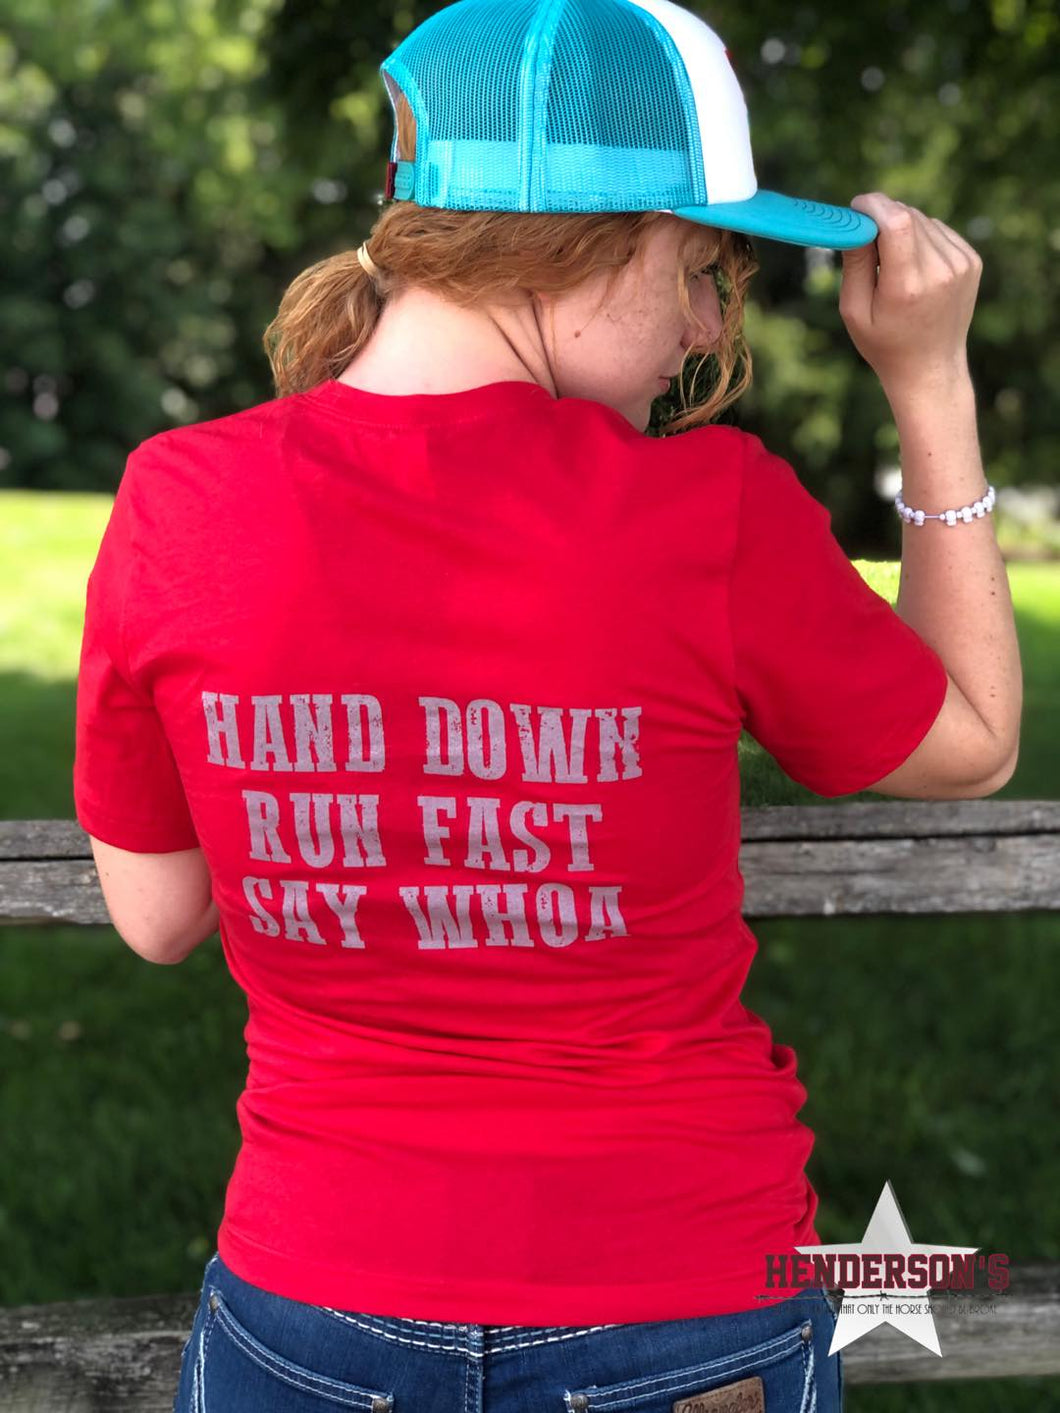 Hands Down Run Fast Men's shirt JB Henderson   